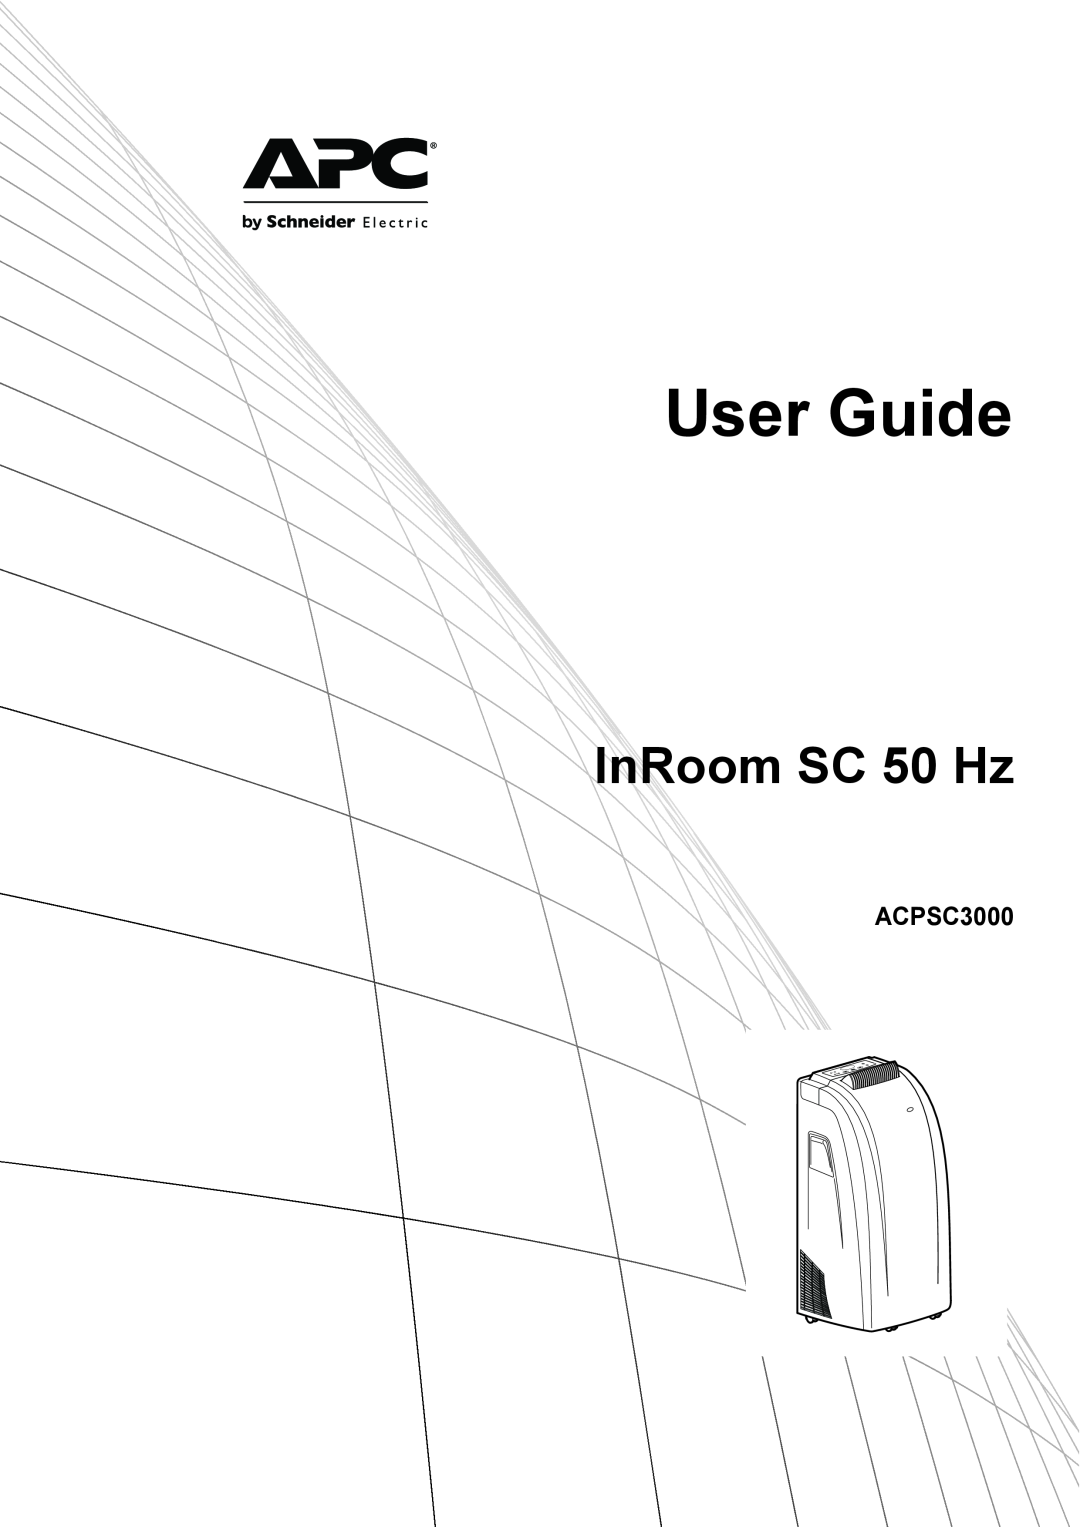 APC ACPSC3000 manual User Guide, InRoom SC 50 Hz 